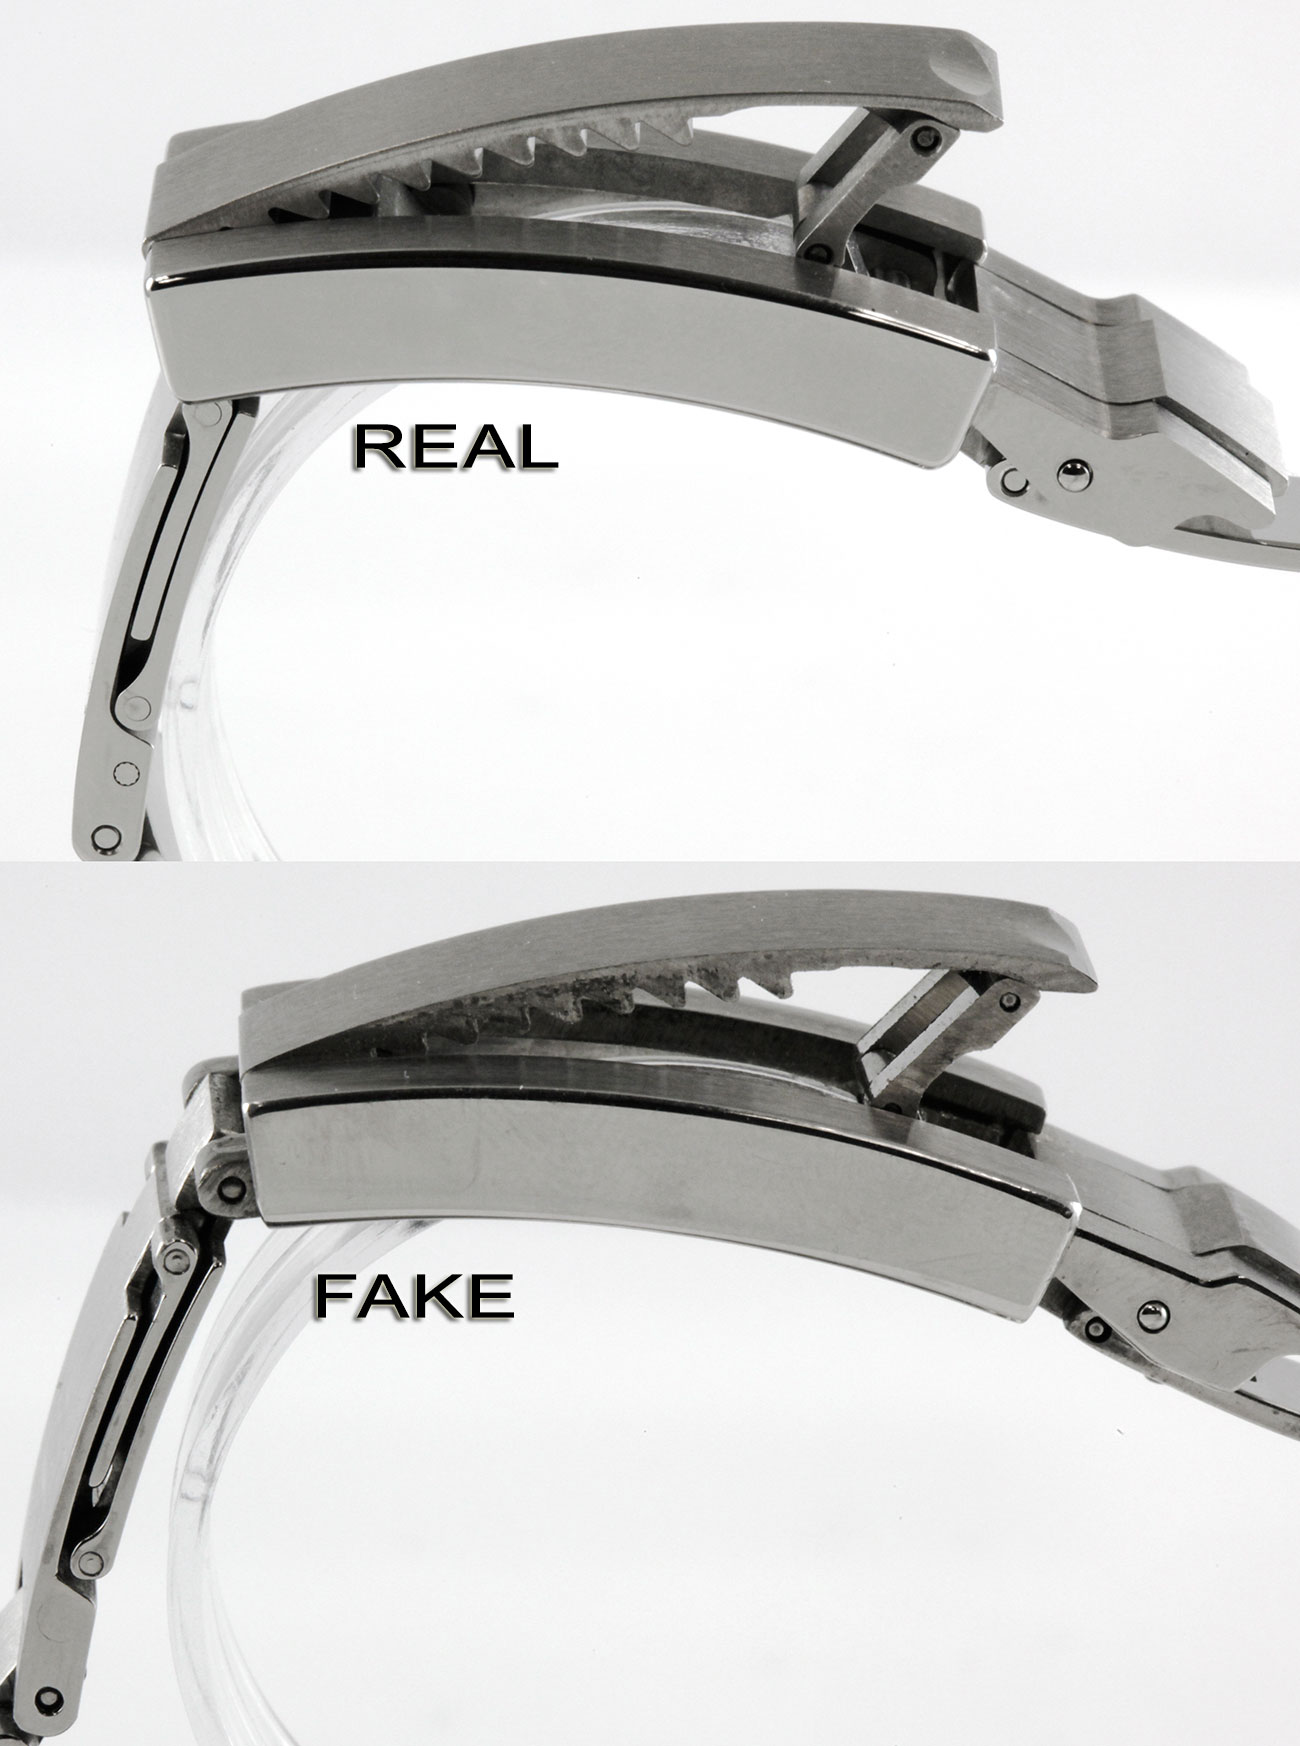 Rolex Sea-Dweller DEEPSEA Fake Vs. Real 